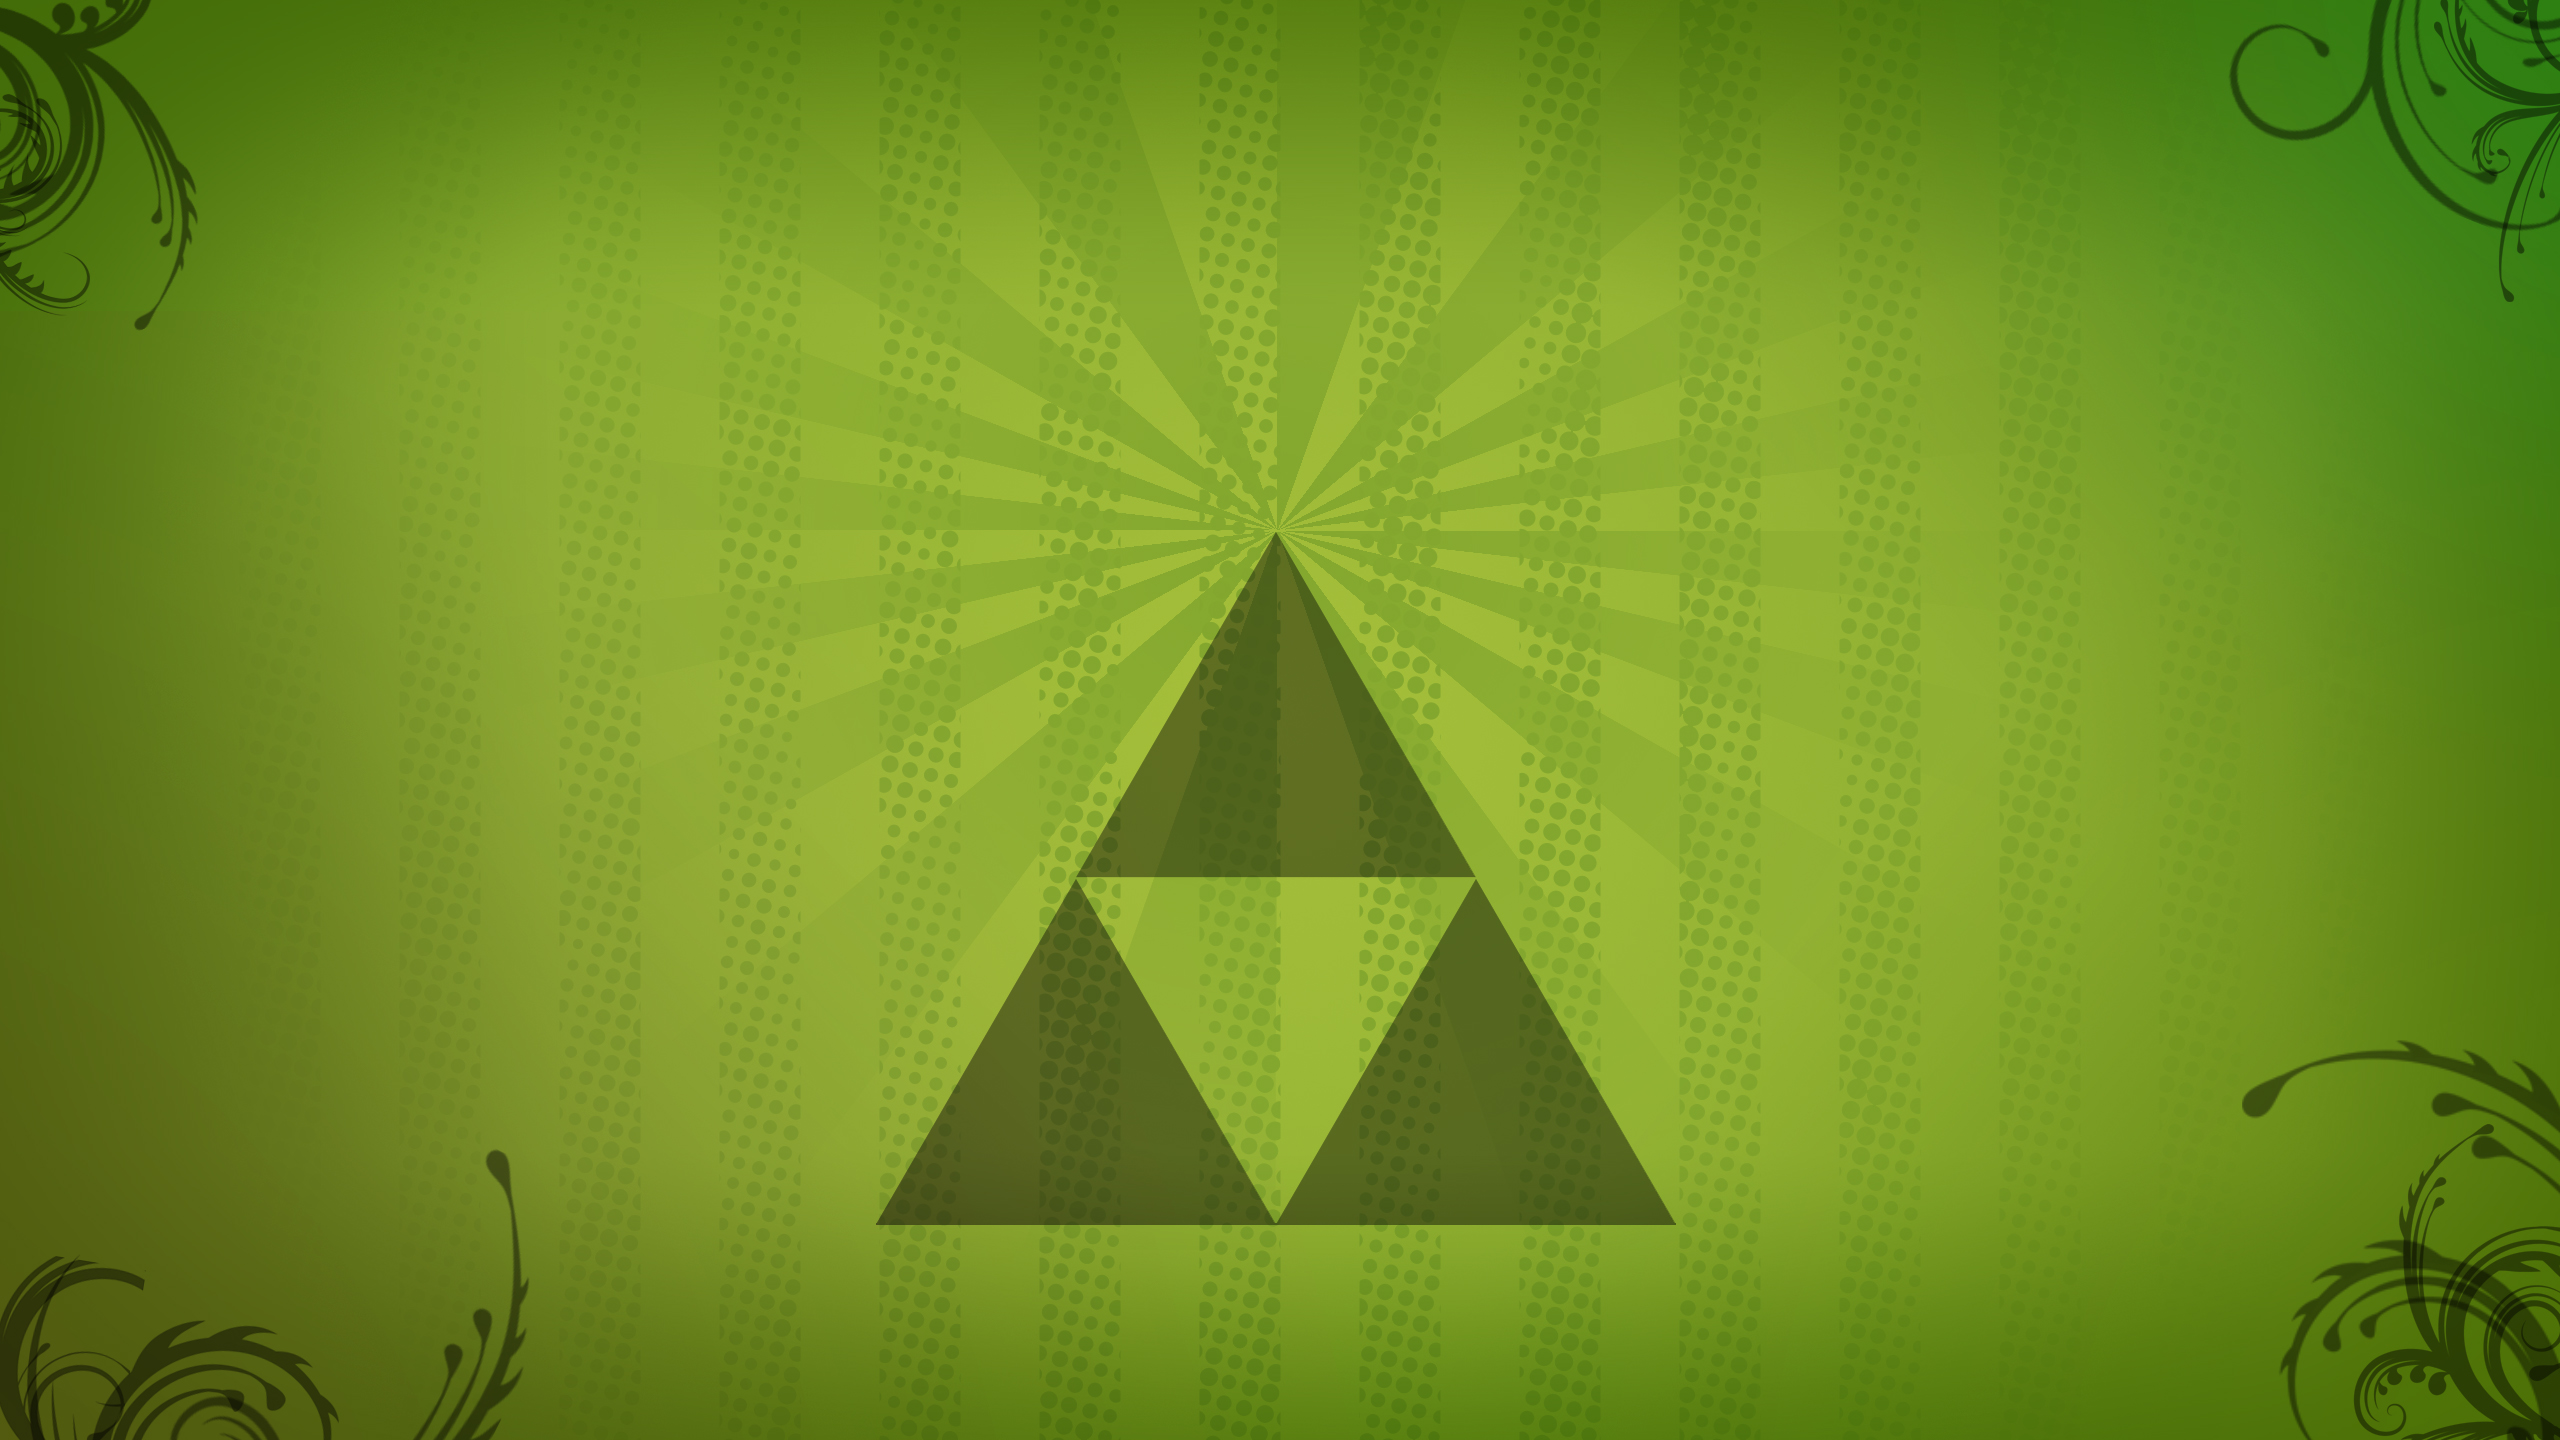 Zelda Triforce Wallpaper Minimalistic By H Thomson